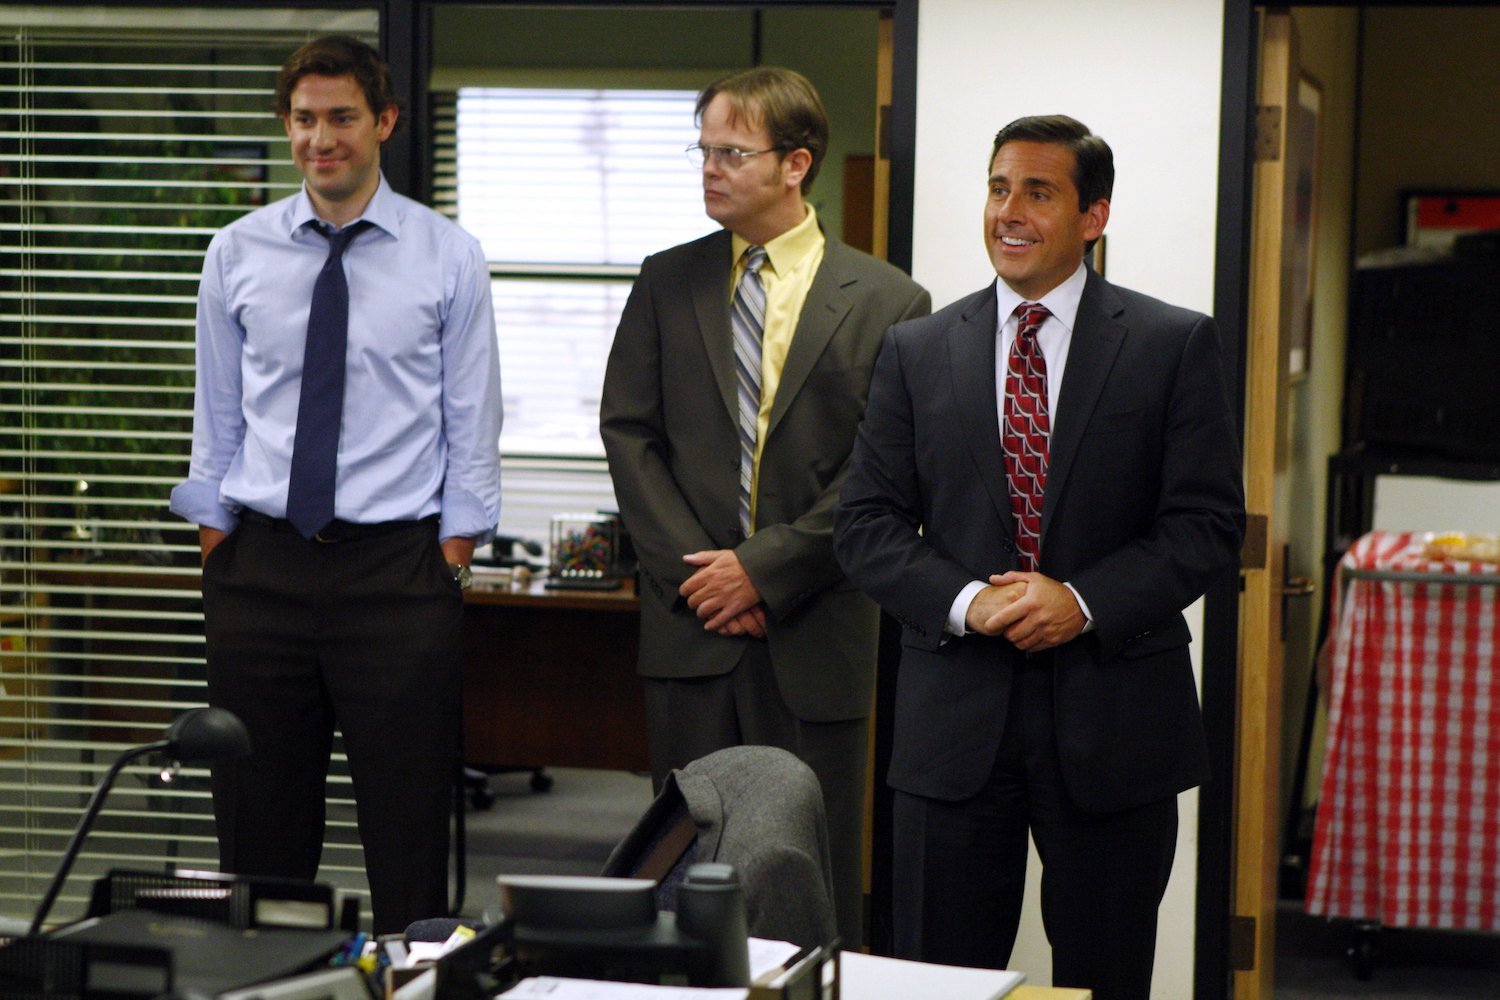 'The Office' stars: John Krasinski, Rainn Wilson, and Steve Carell as their characters Jim, Dwight, and Michael